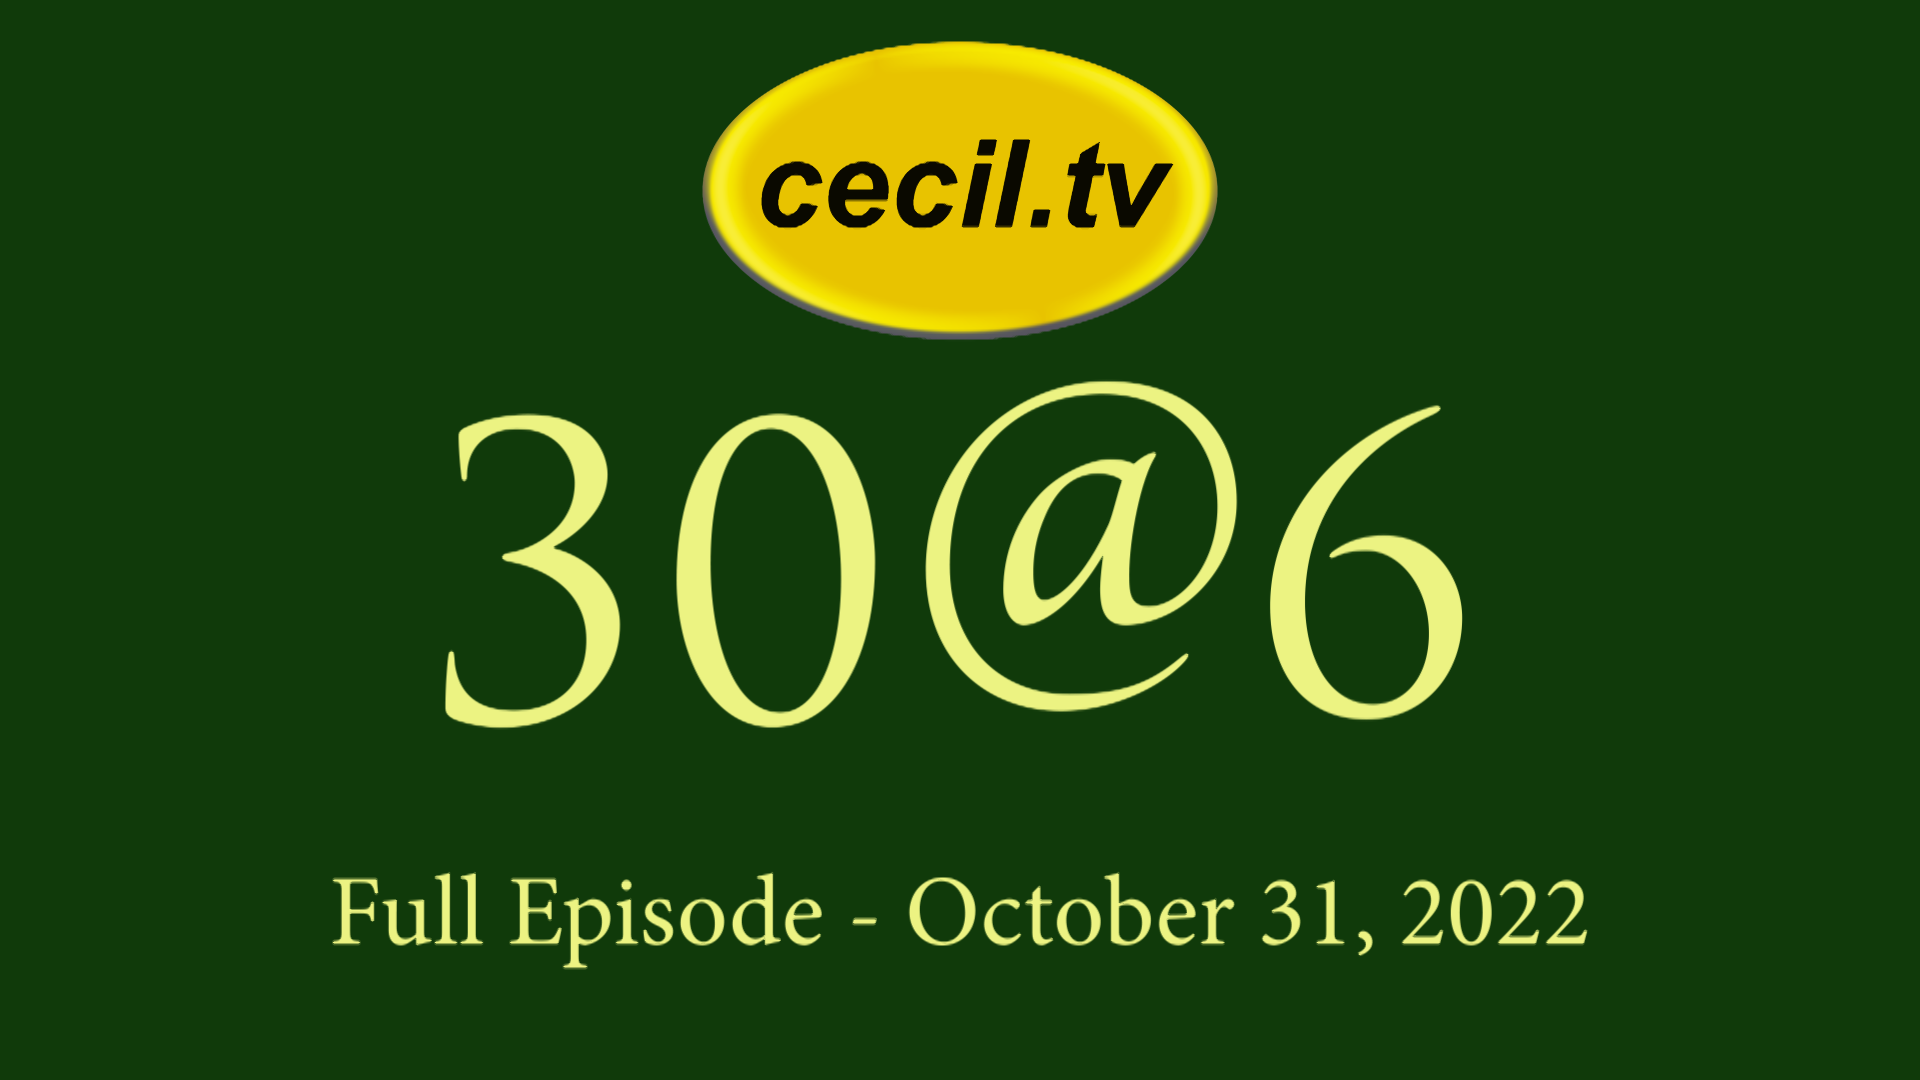 Cecil TV 30@6 Full Episode - October 31, 2022